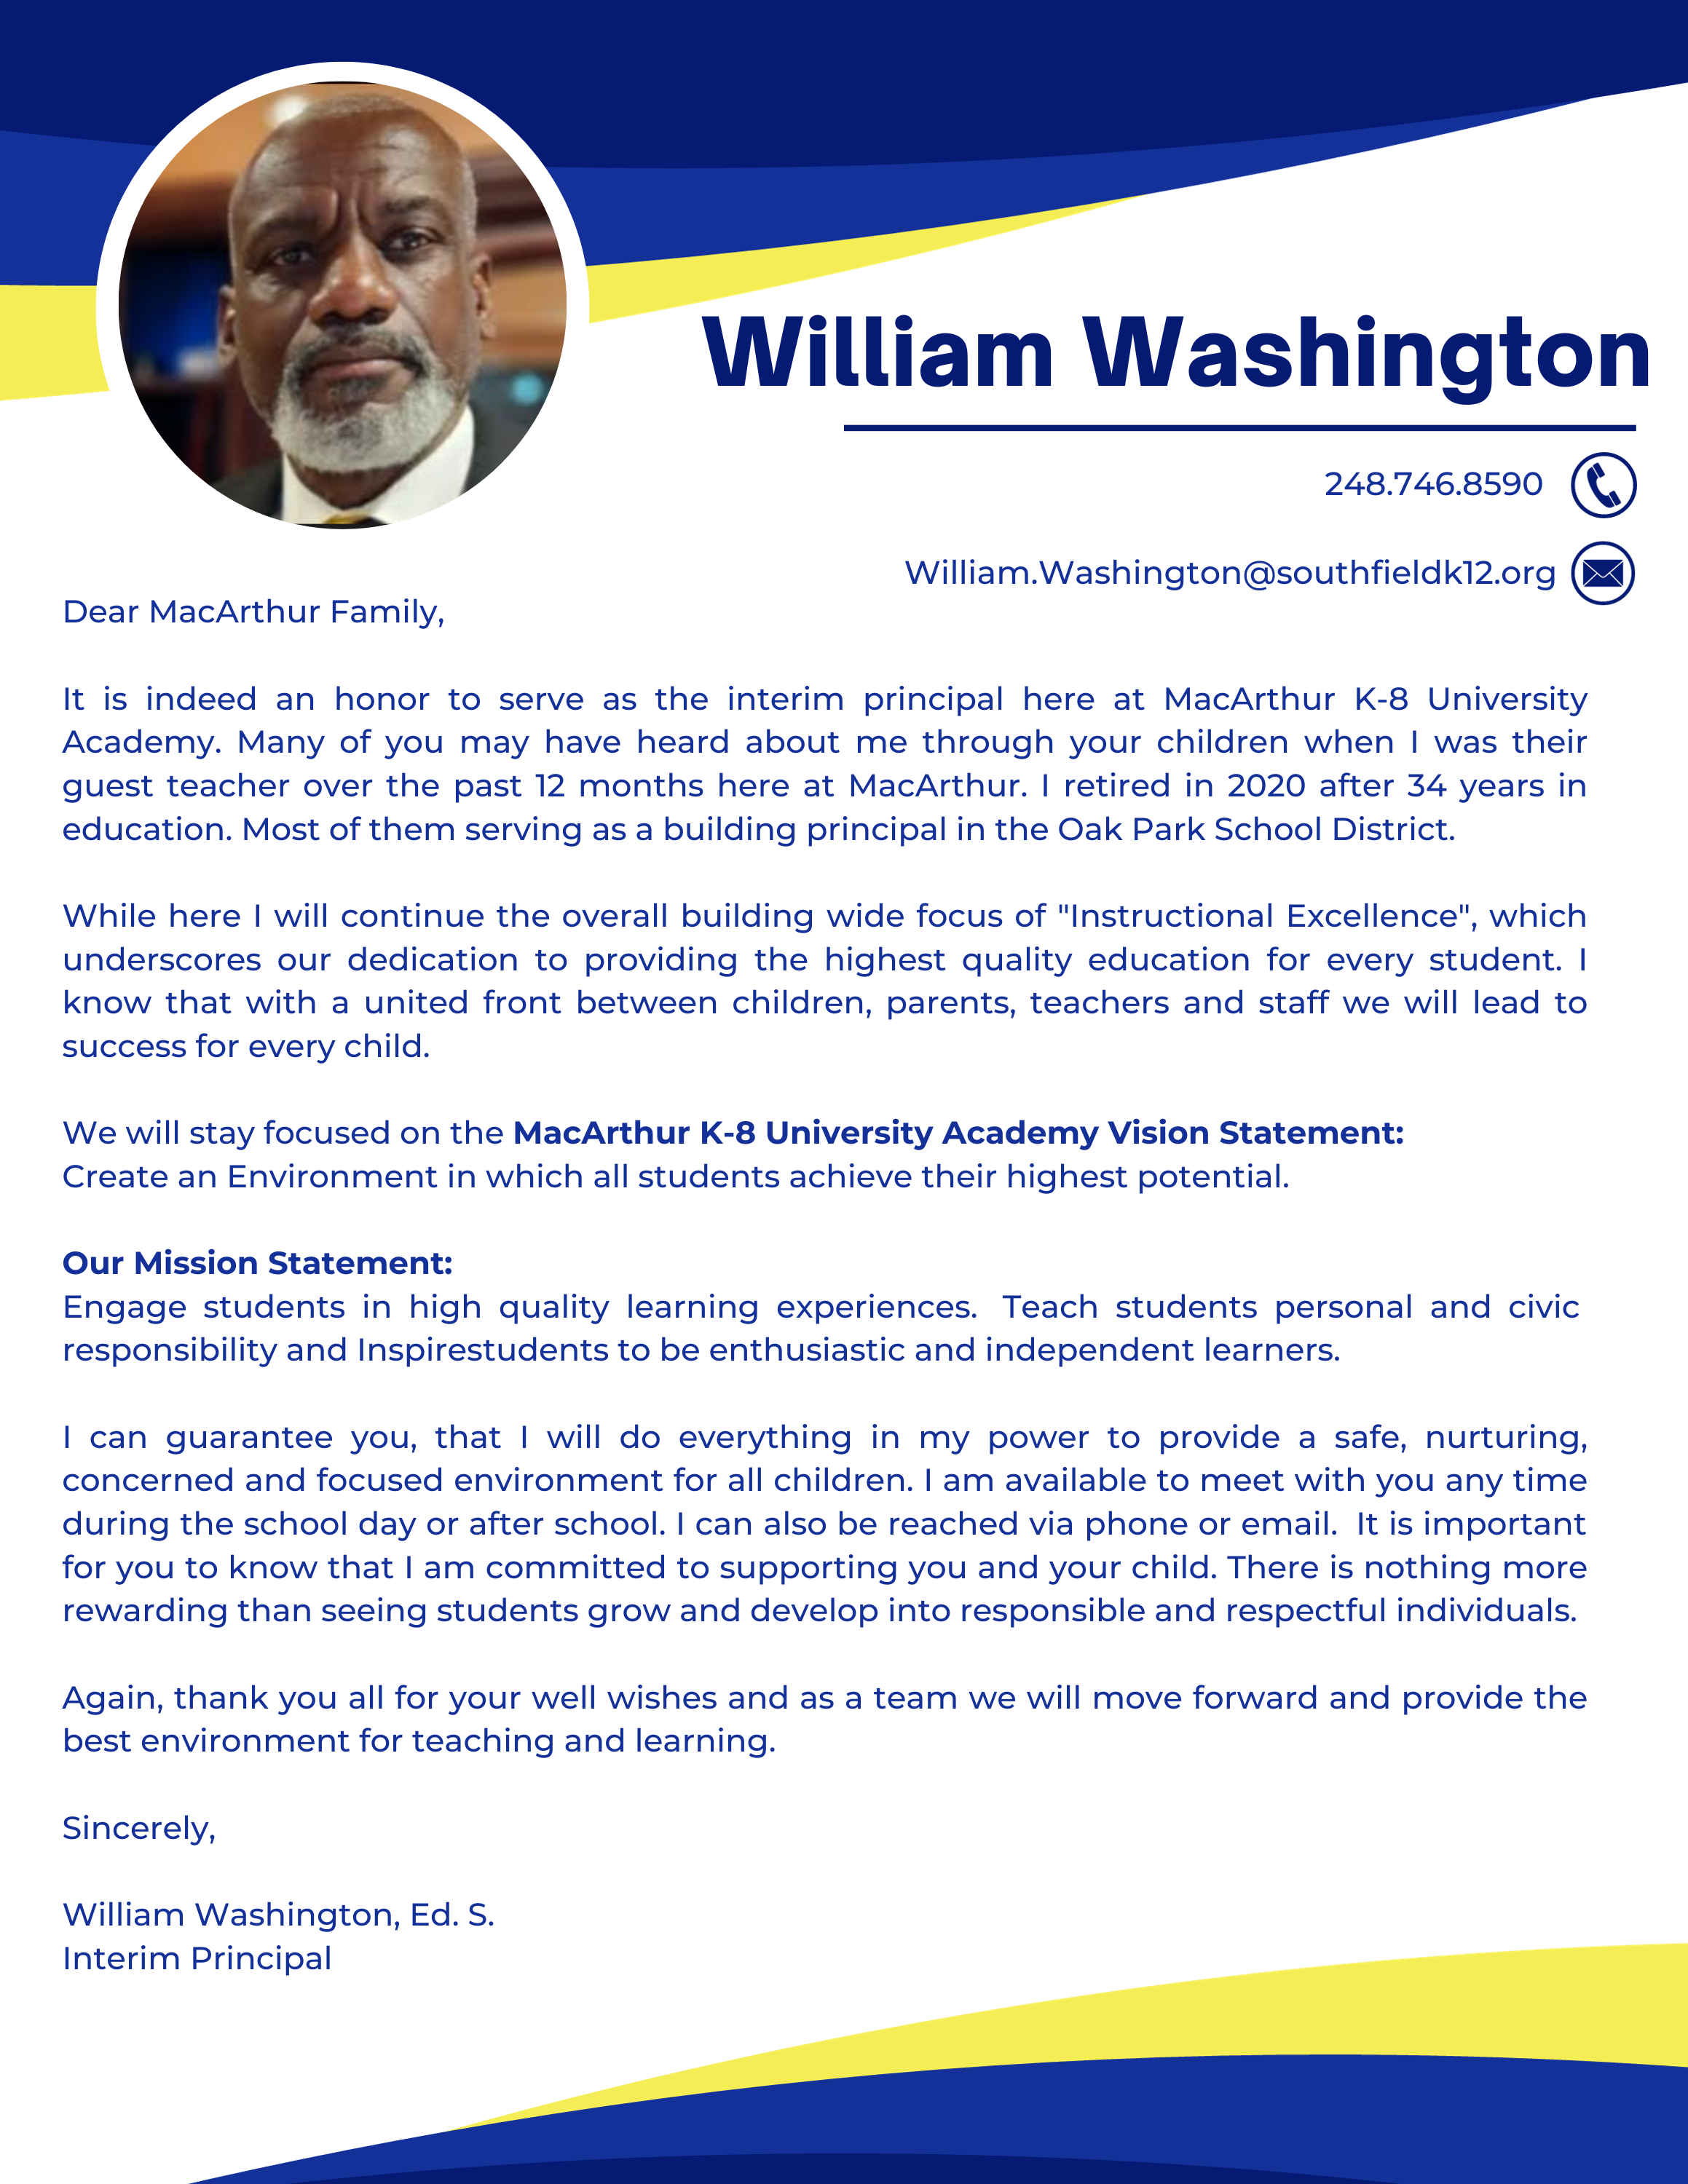 Mr. William Washington